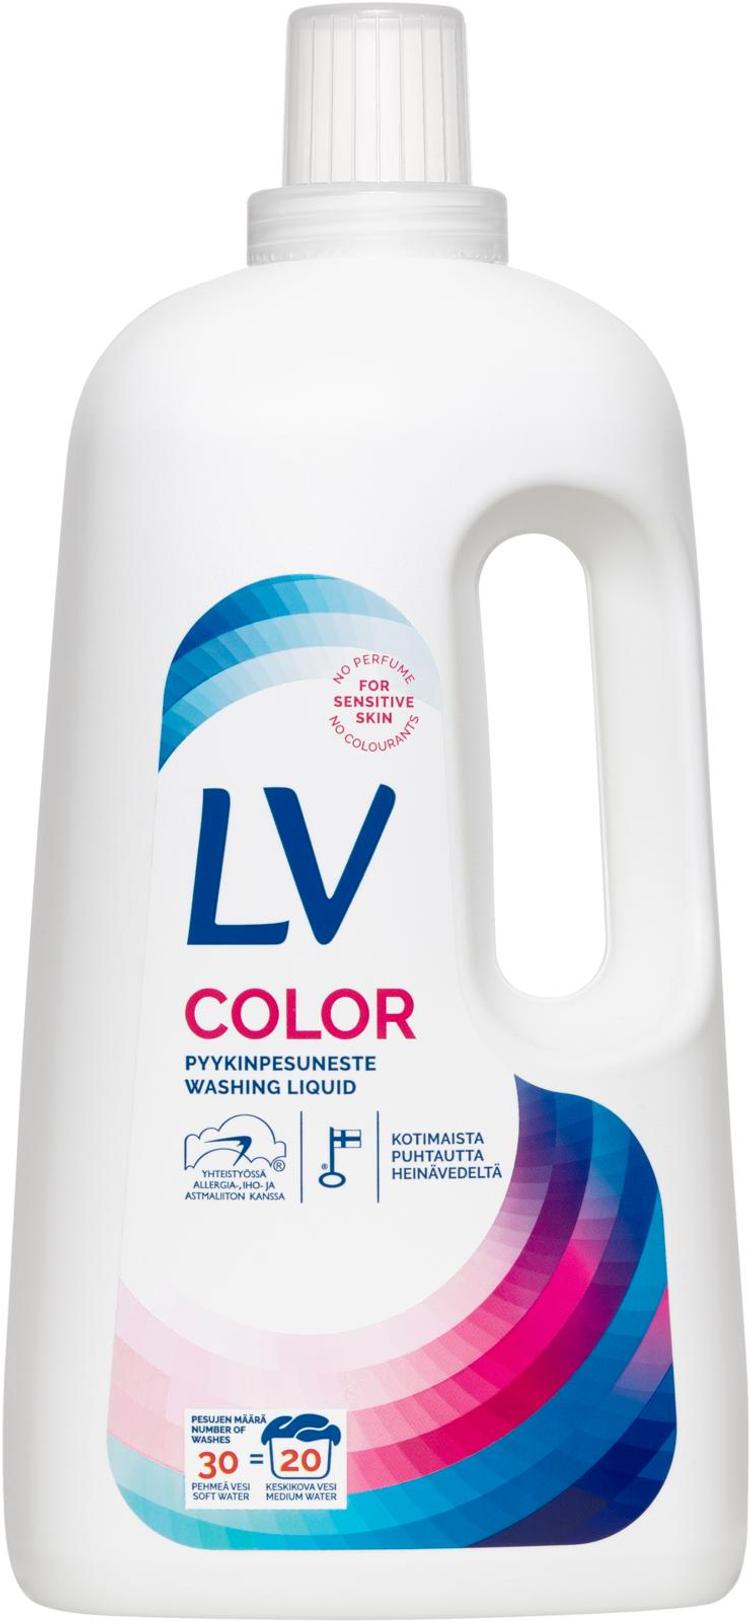 LV 1,5l Color Pyykinpesuneste